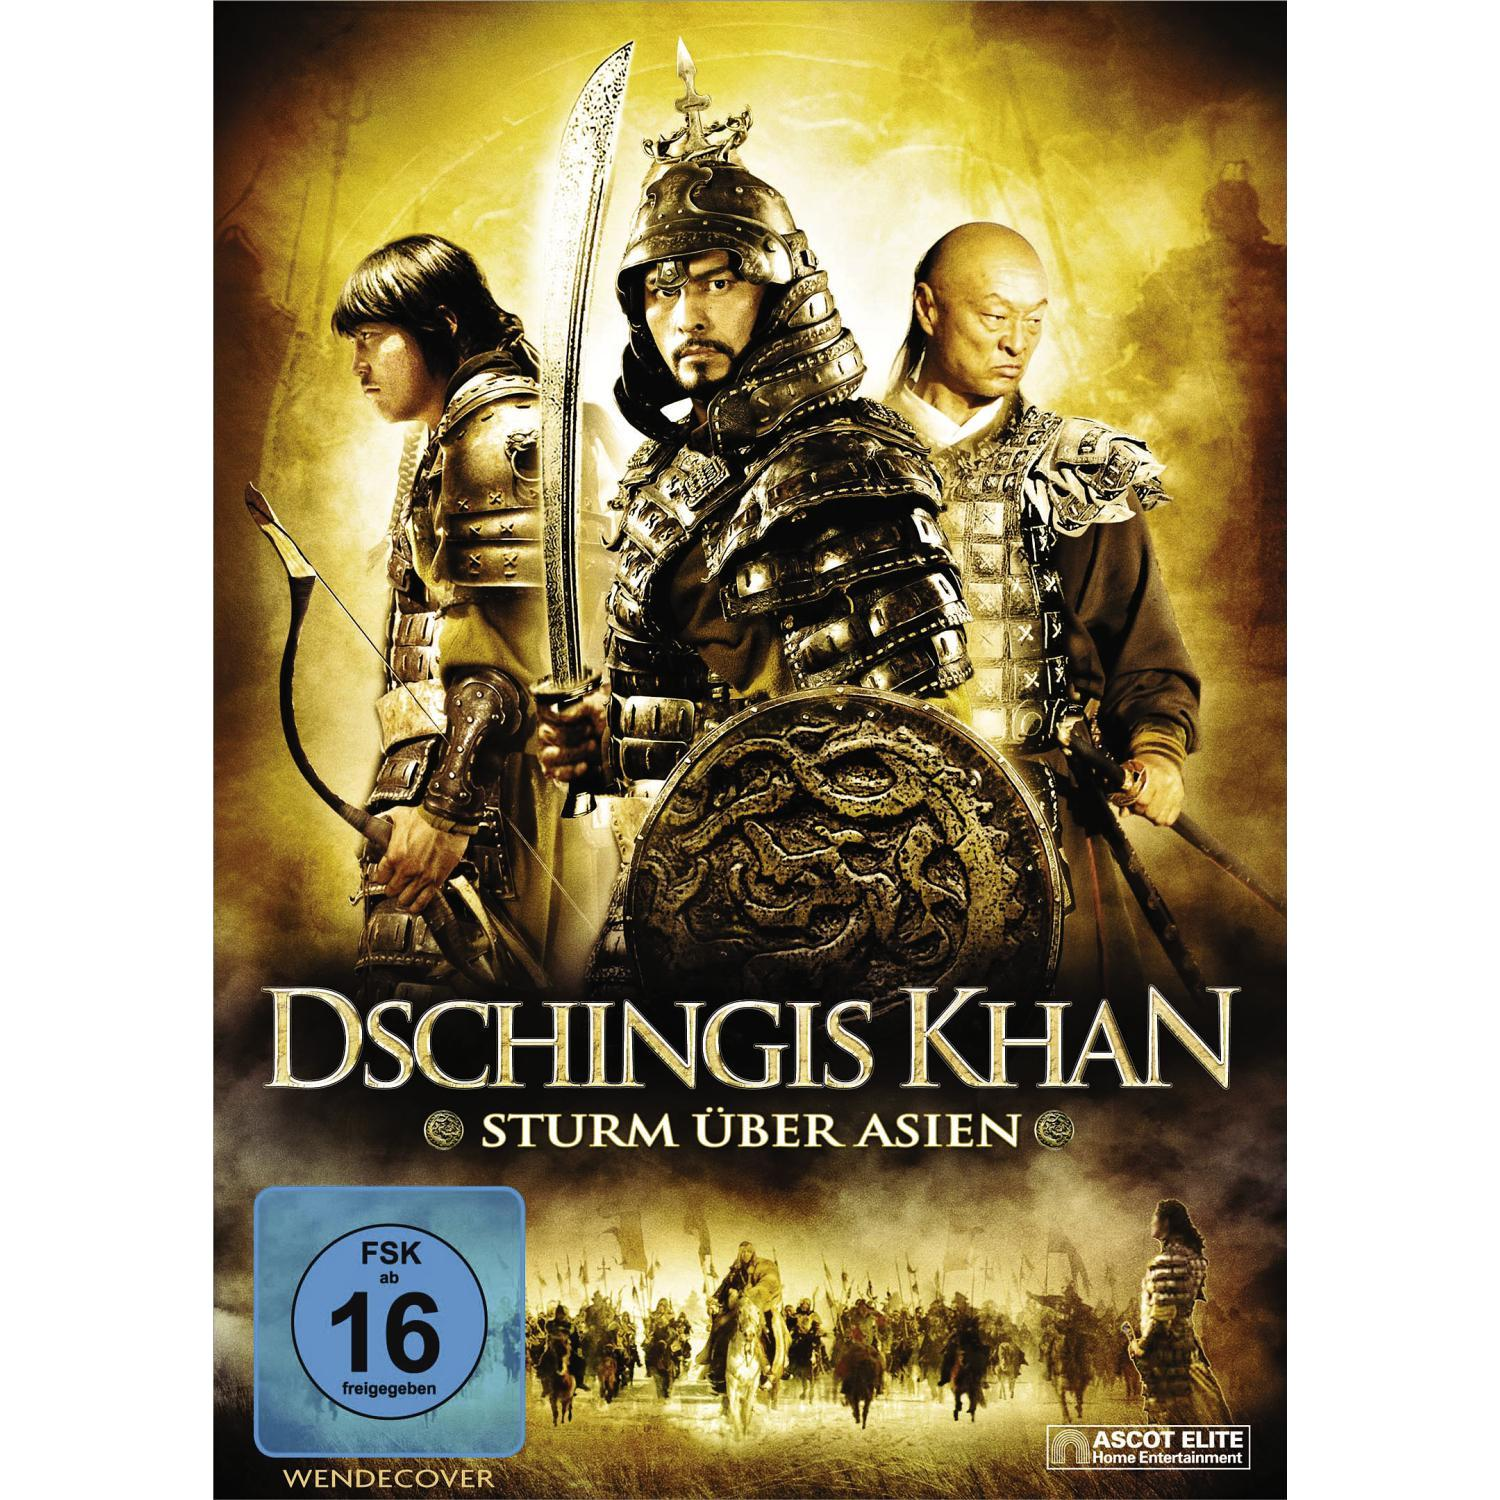 über DVD Asien Khan Dschingis Sturm -